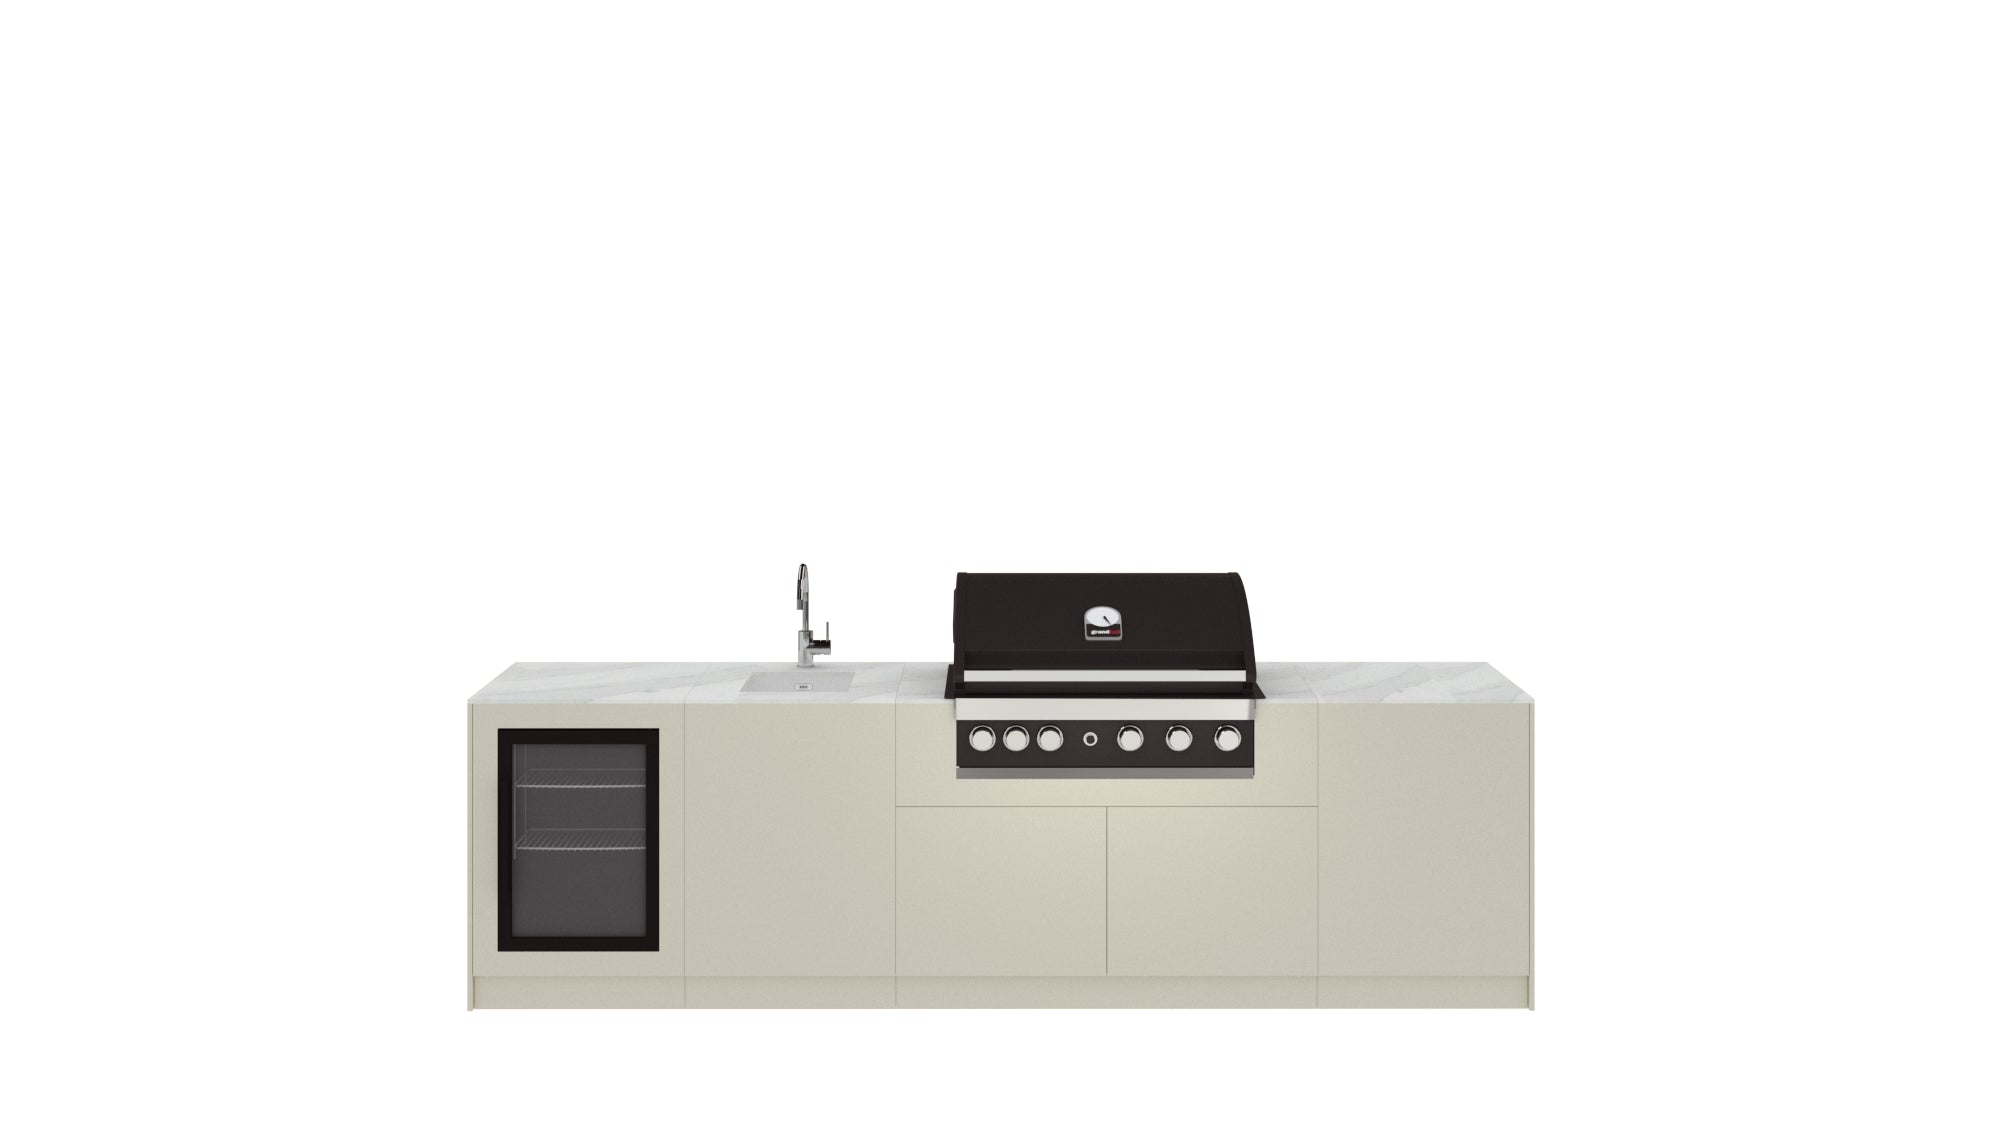 Kitchen Boxy - Outdoor Kitchen KB300 Variant 1 (3D Configurator)